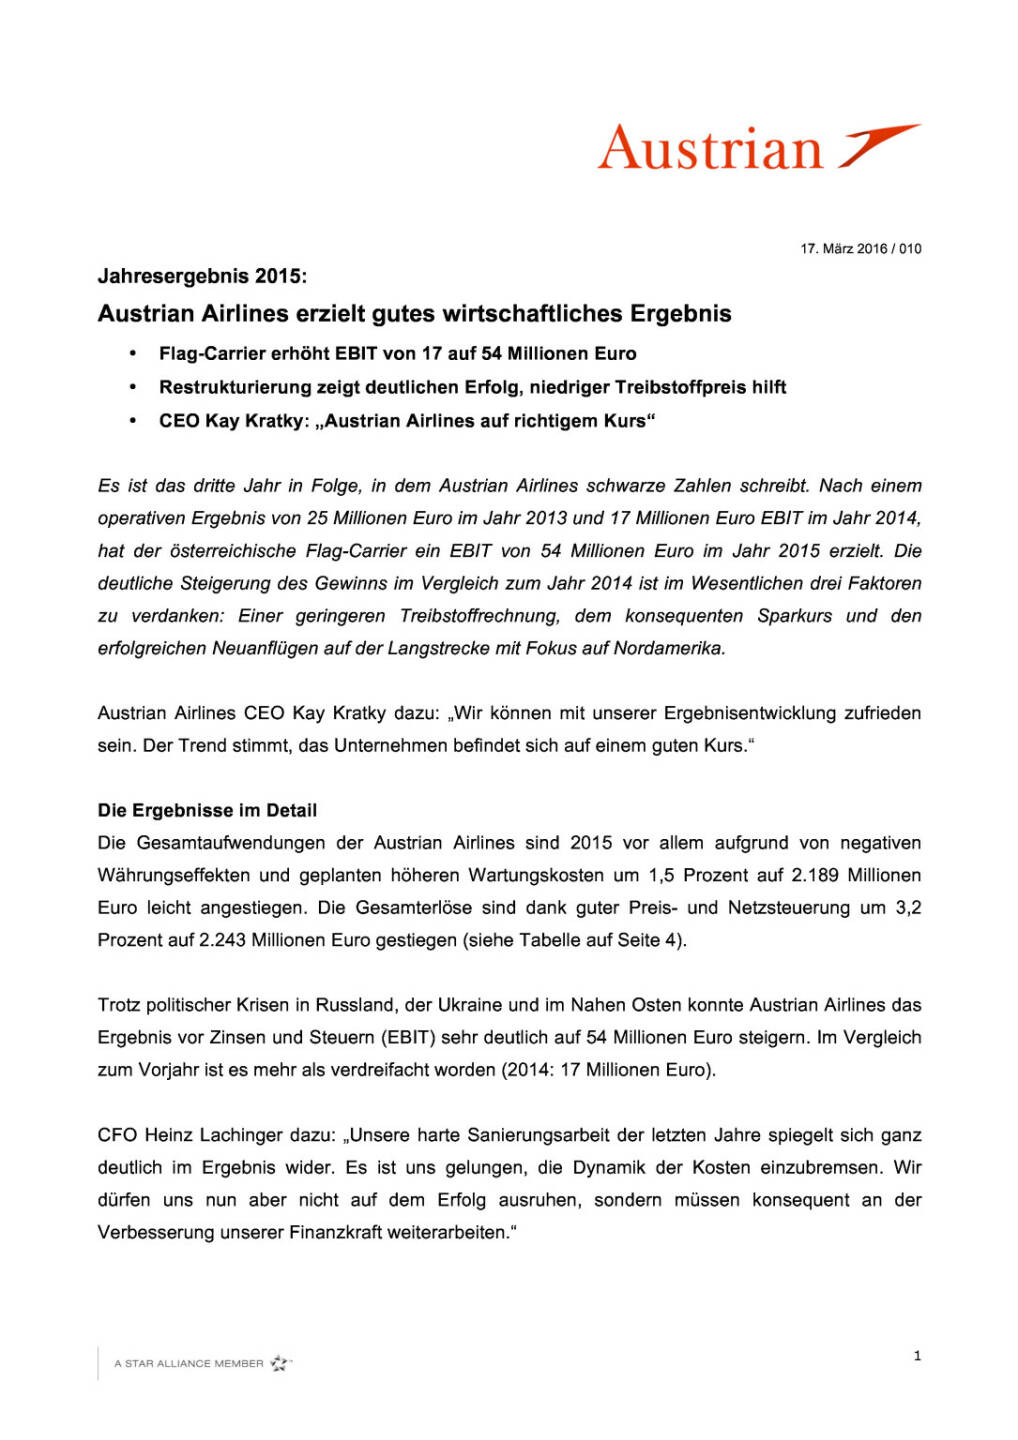 Austrian Airlines Ergebnis 2015, Seite 1/4, komplettes Dokument unter http://boerse-social.com/static/uploads/file_798_austrian_airlines_ergebnis_2015.pdf